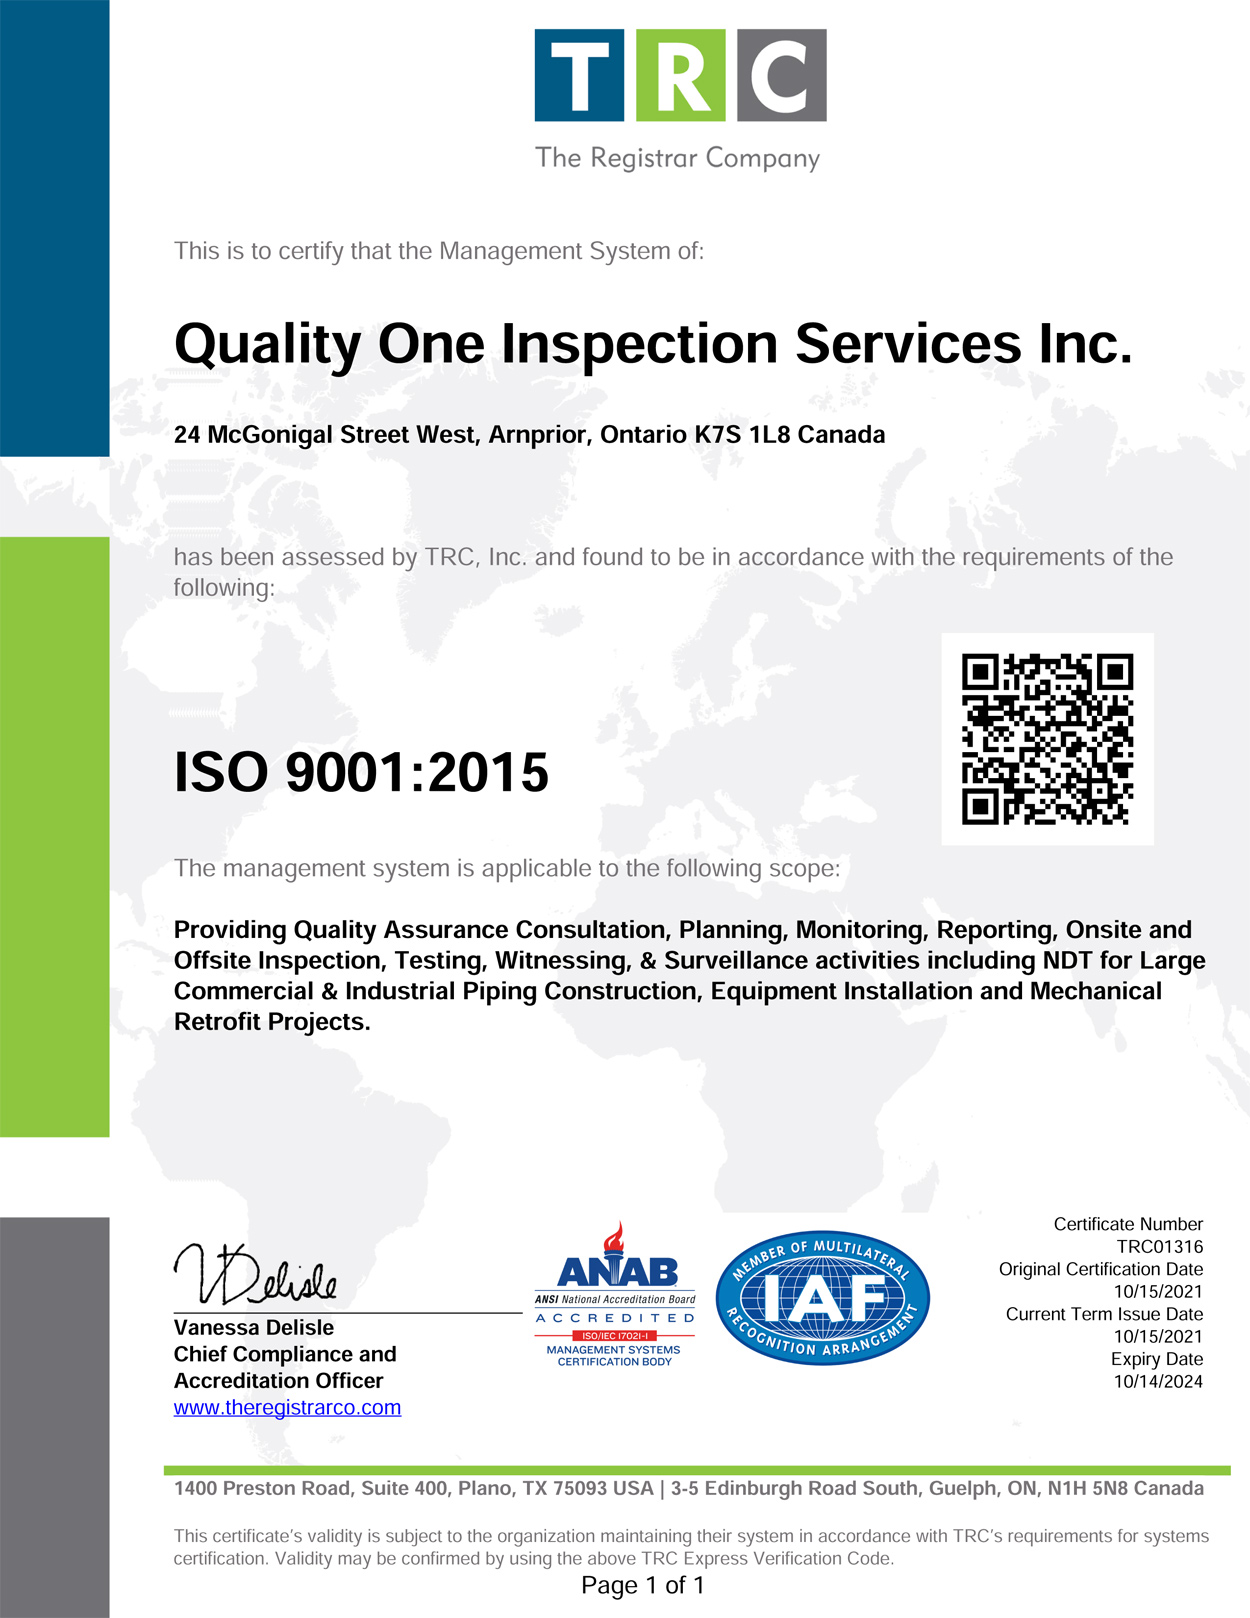 TRC ISO 9001:2015 certificate